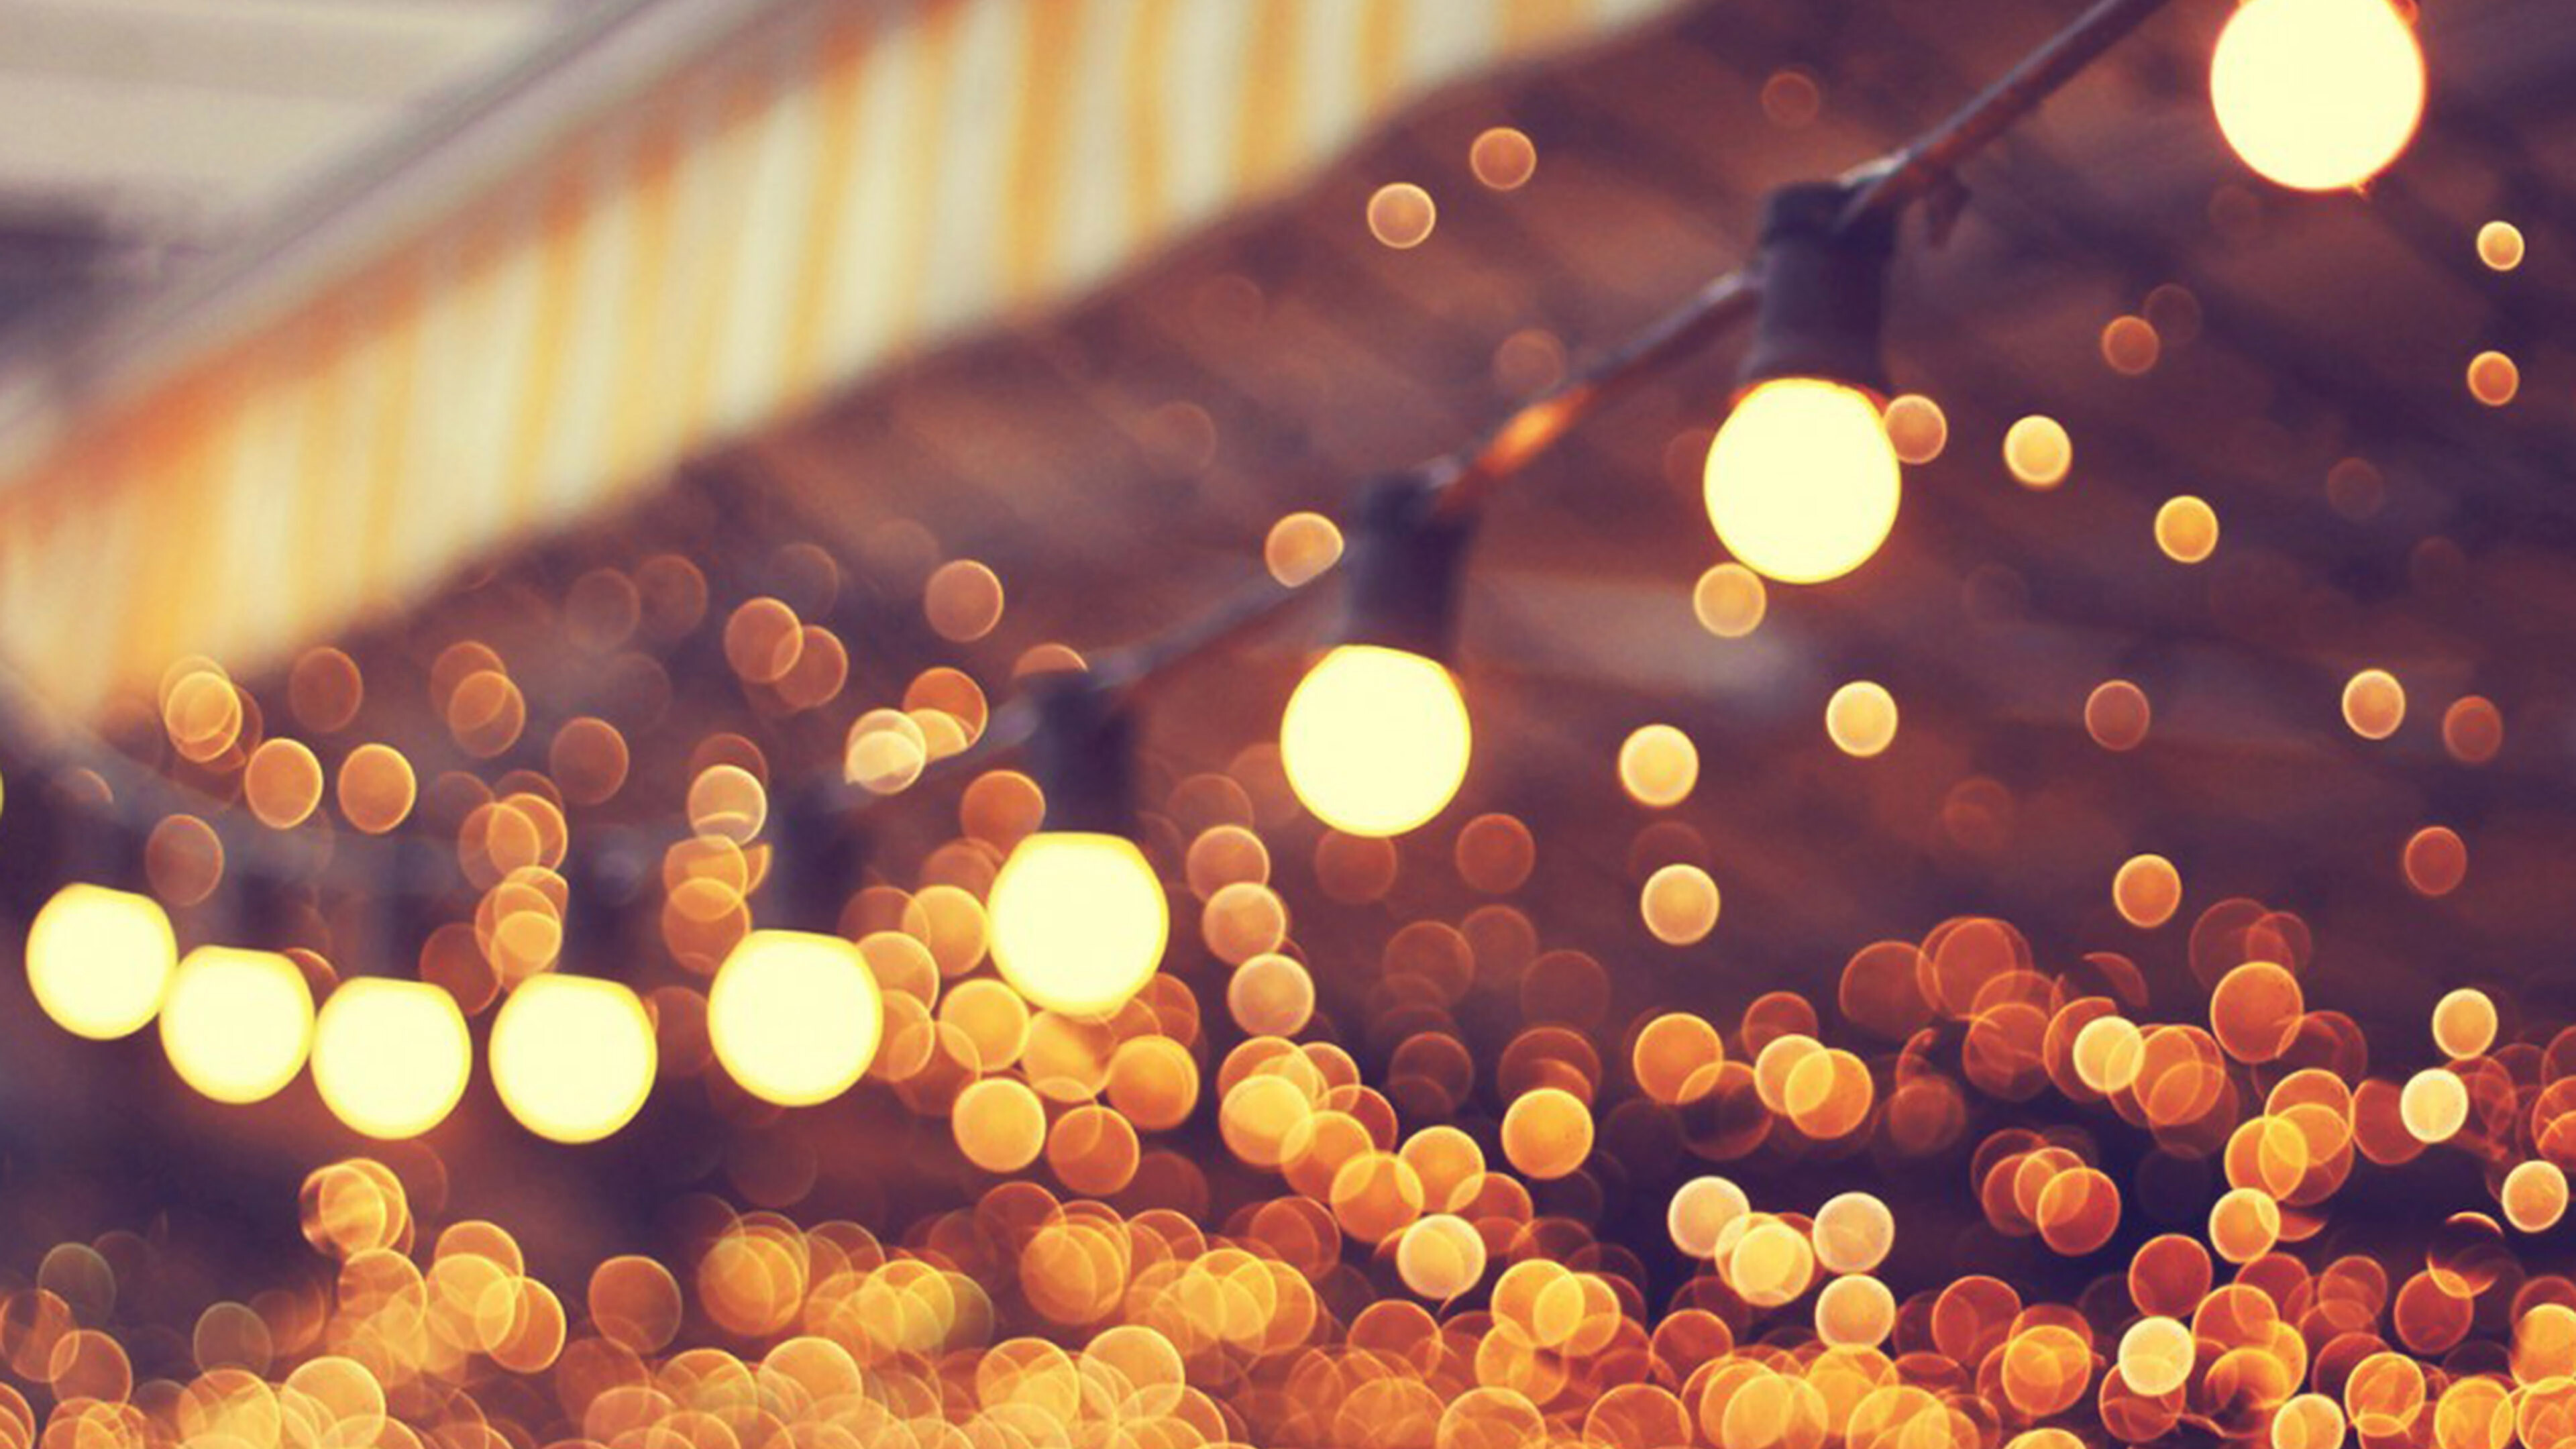 Gold Lights: The traditional ball-shaped glass bulbs, Light bulb decor, Warm white blurry lighting. 3840x2160 4K Background.